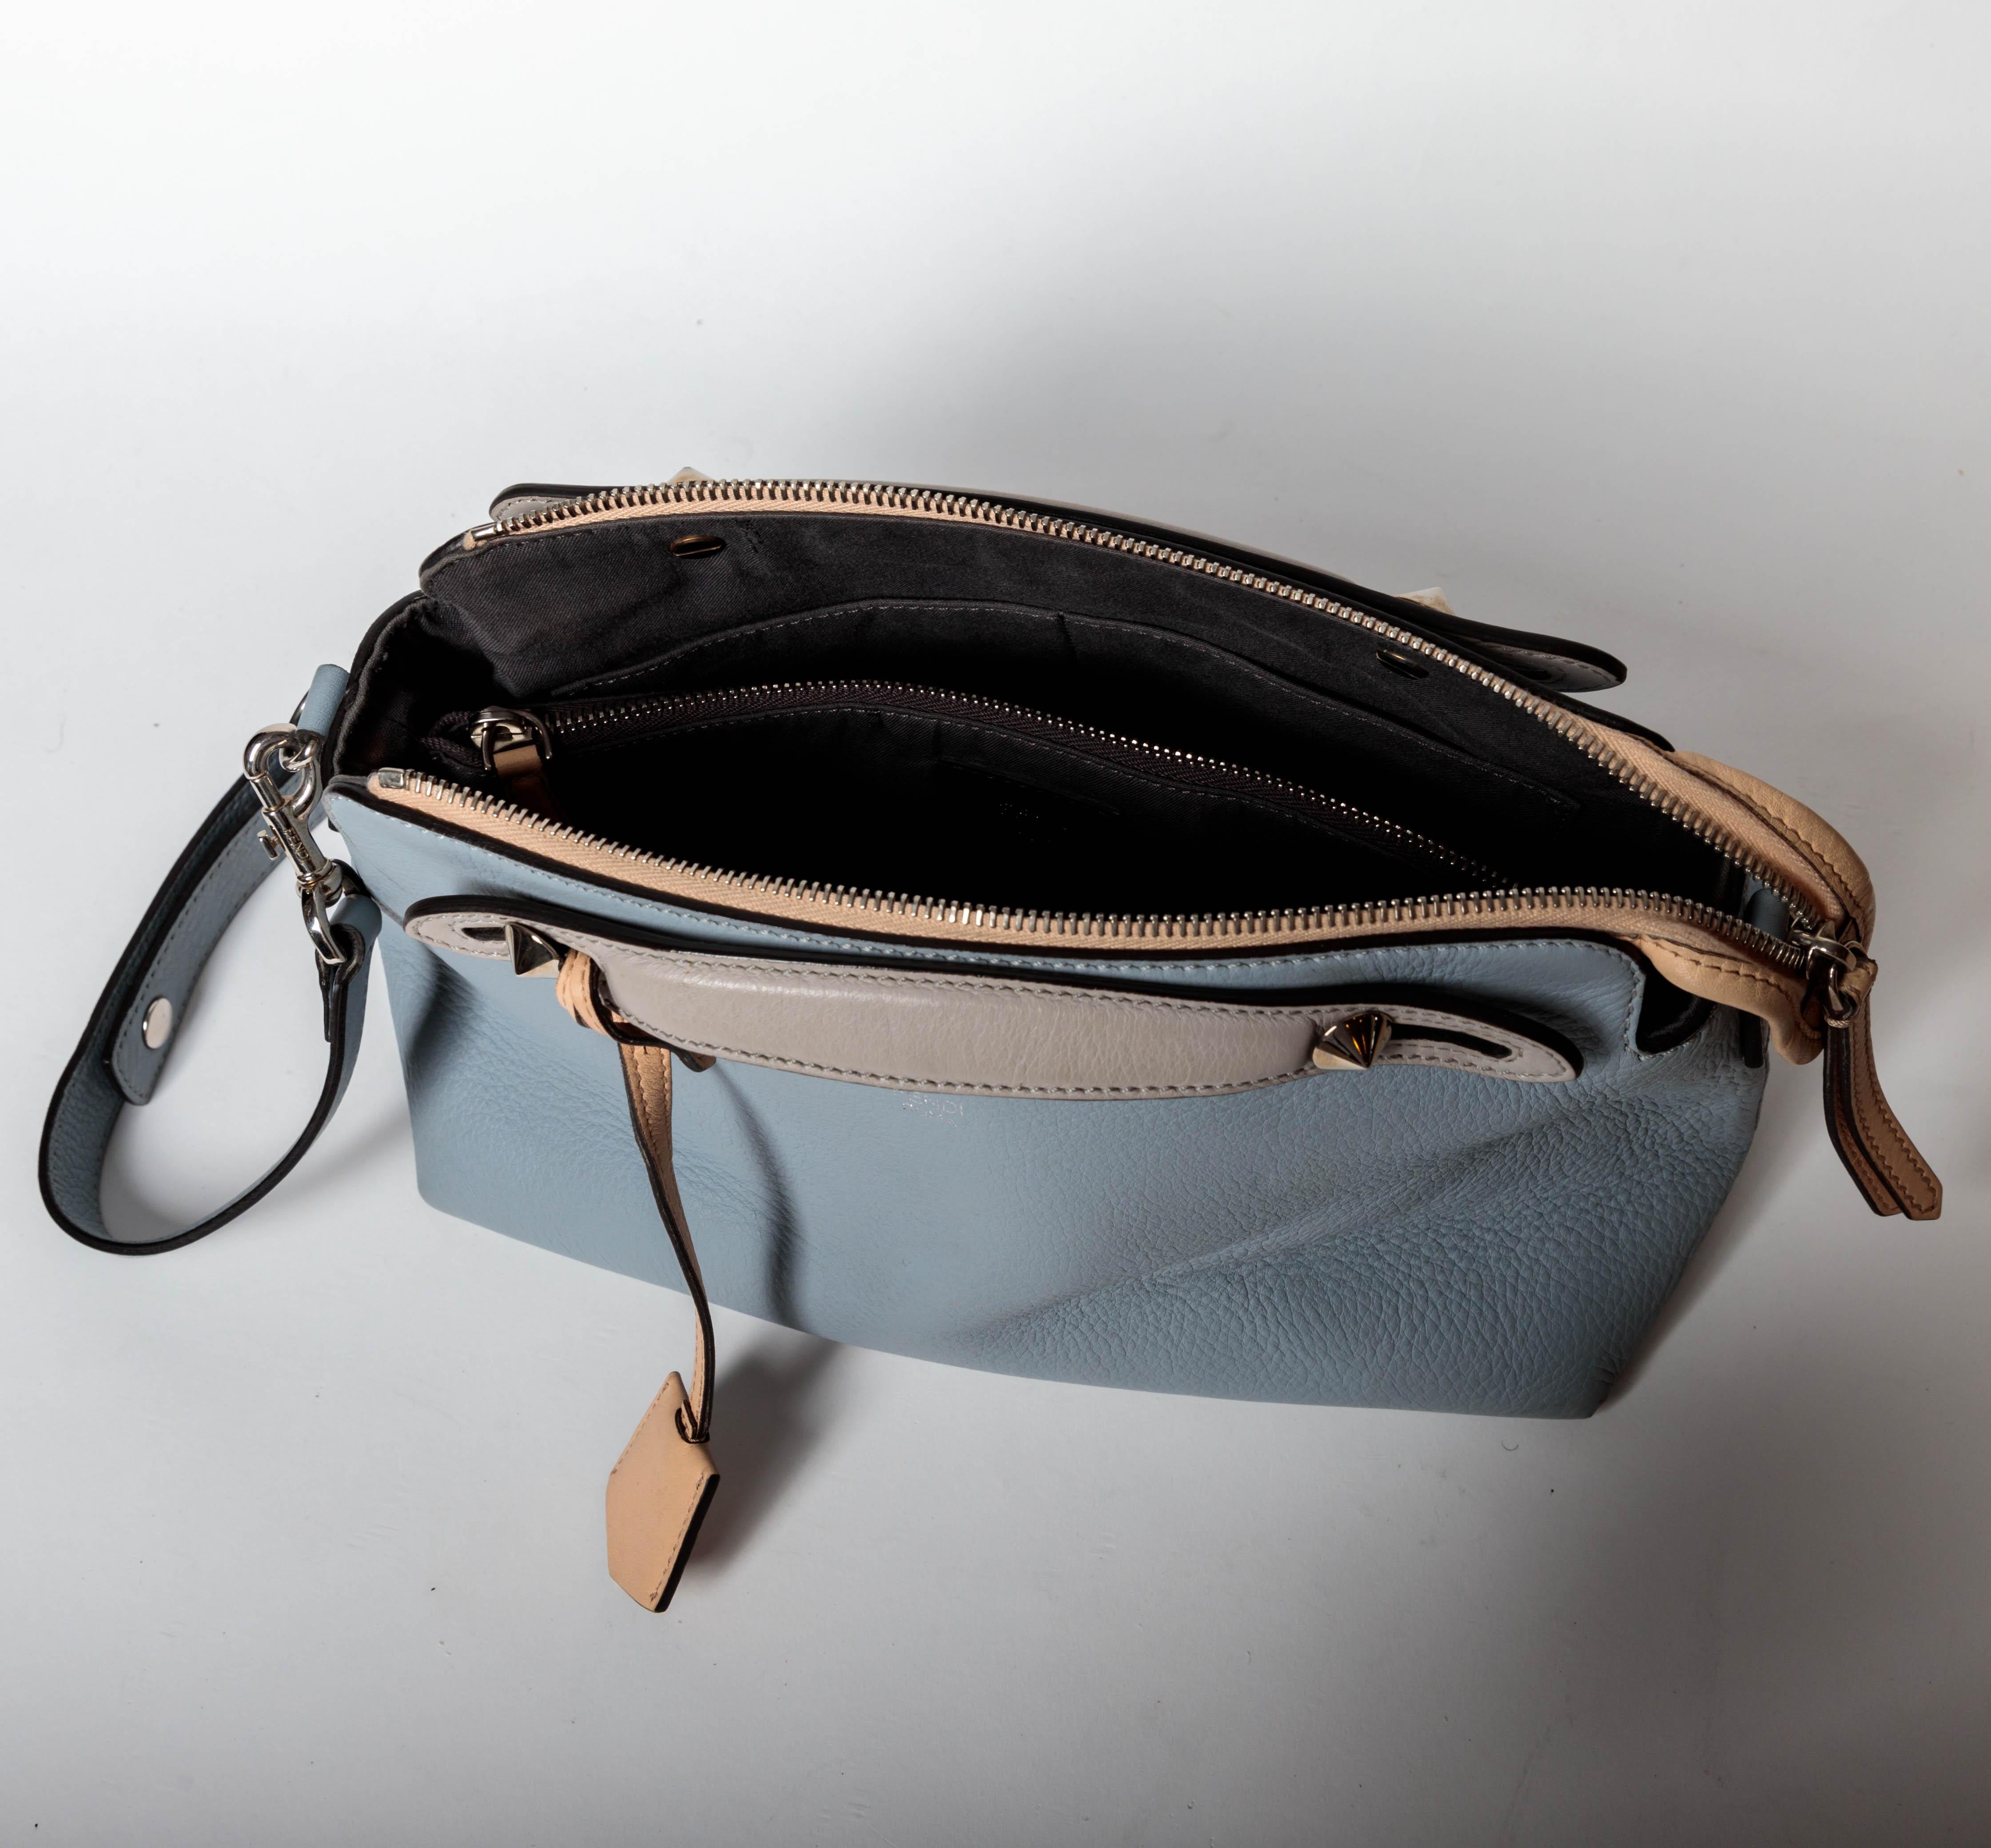 Fendi Top Handle Ice Blue Leather Bag with Detachable Shoulder Strap  For Sale 5